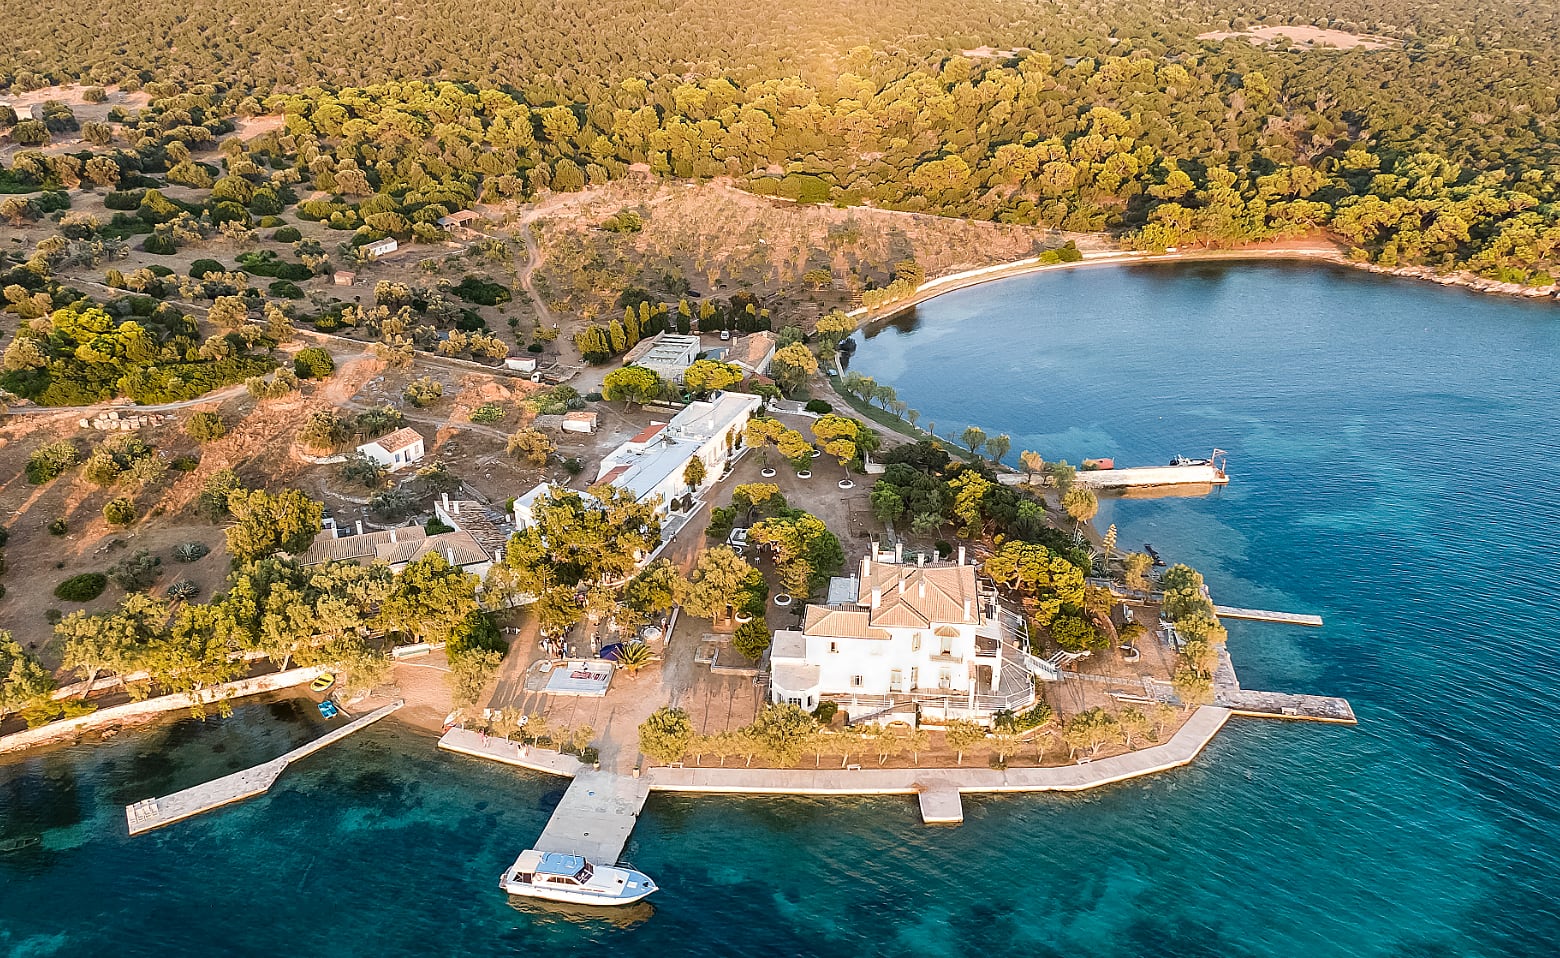 Private Islands for rent - Greek Beach Estate - Greece - Europe